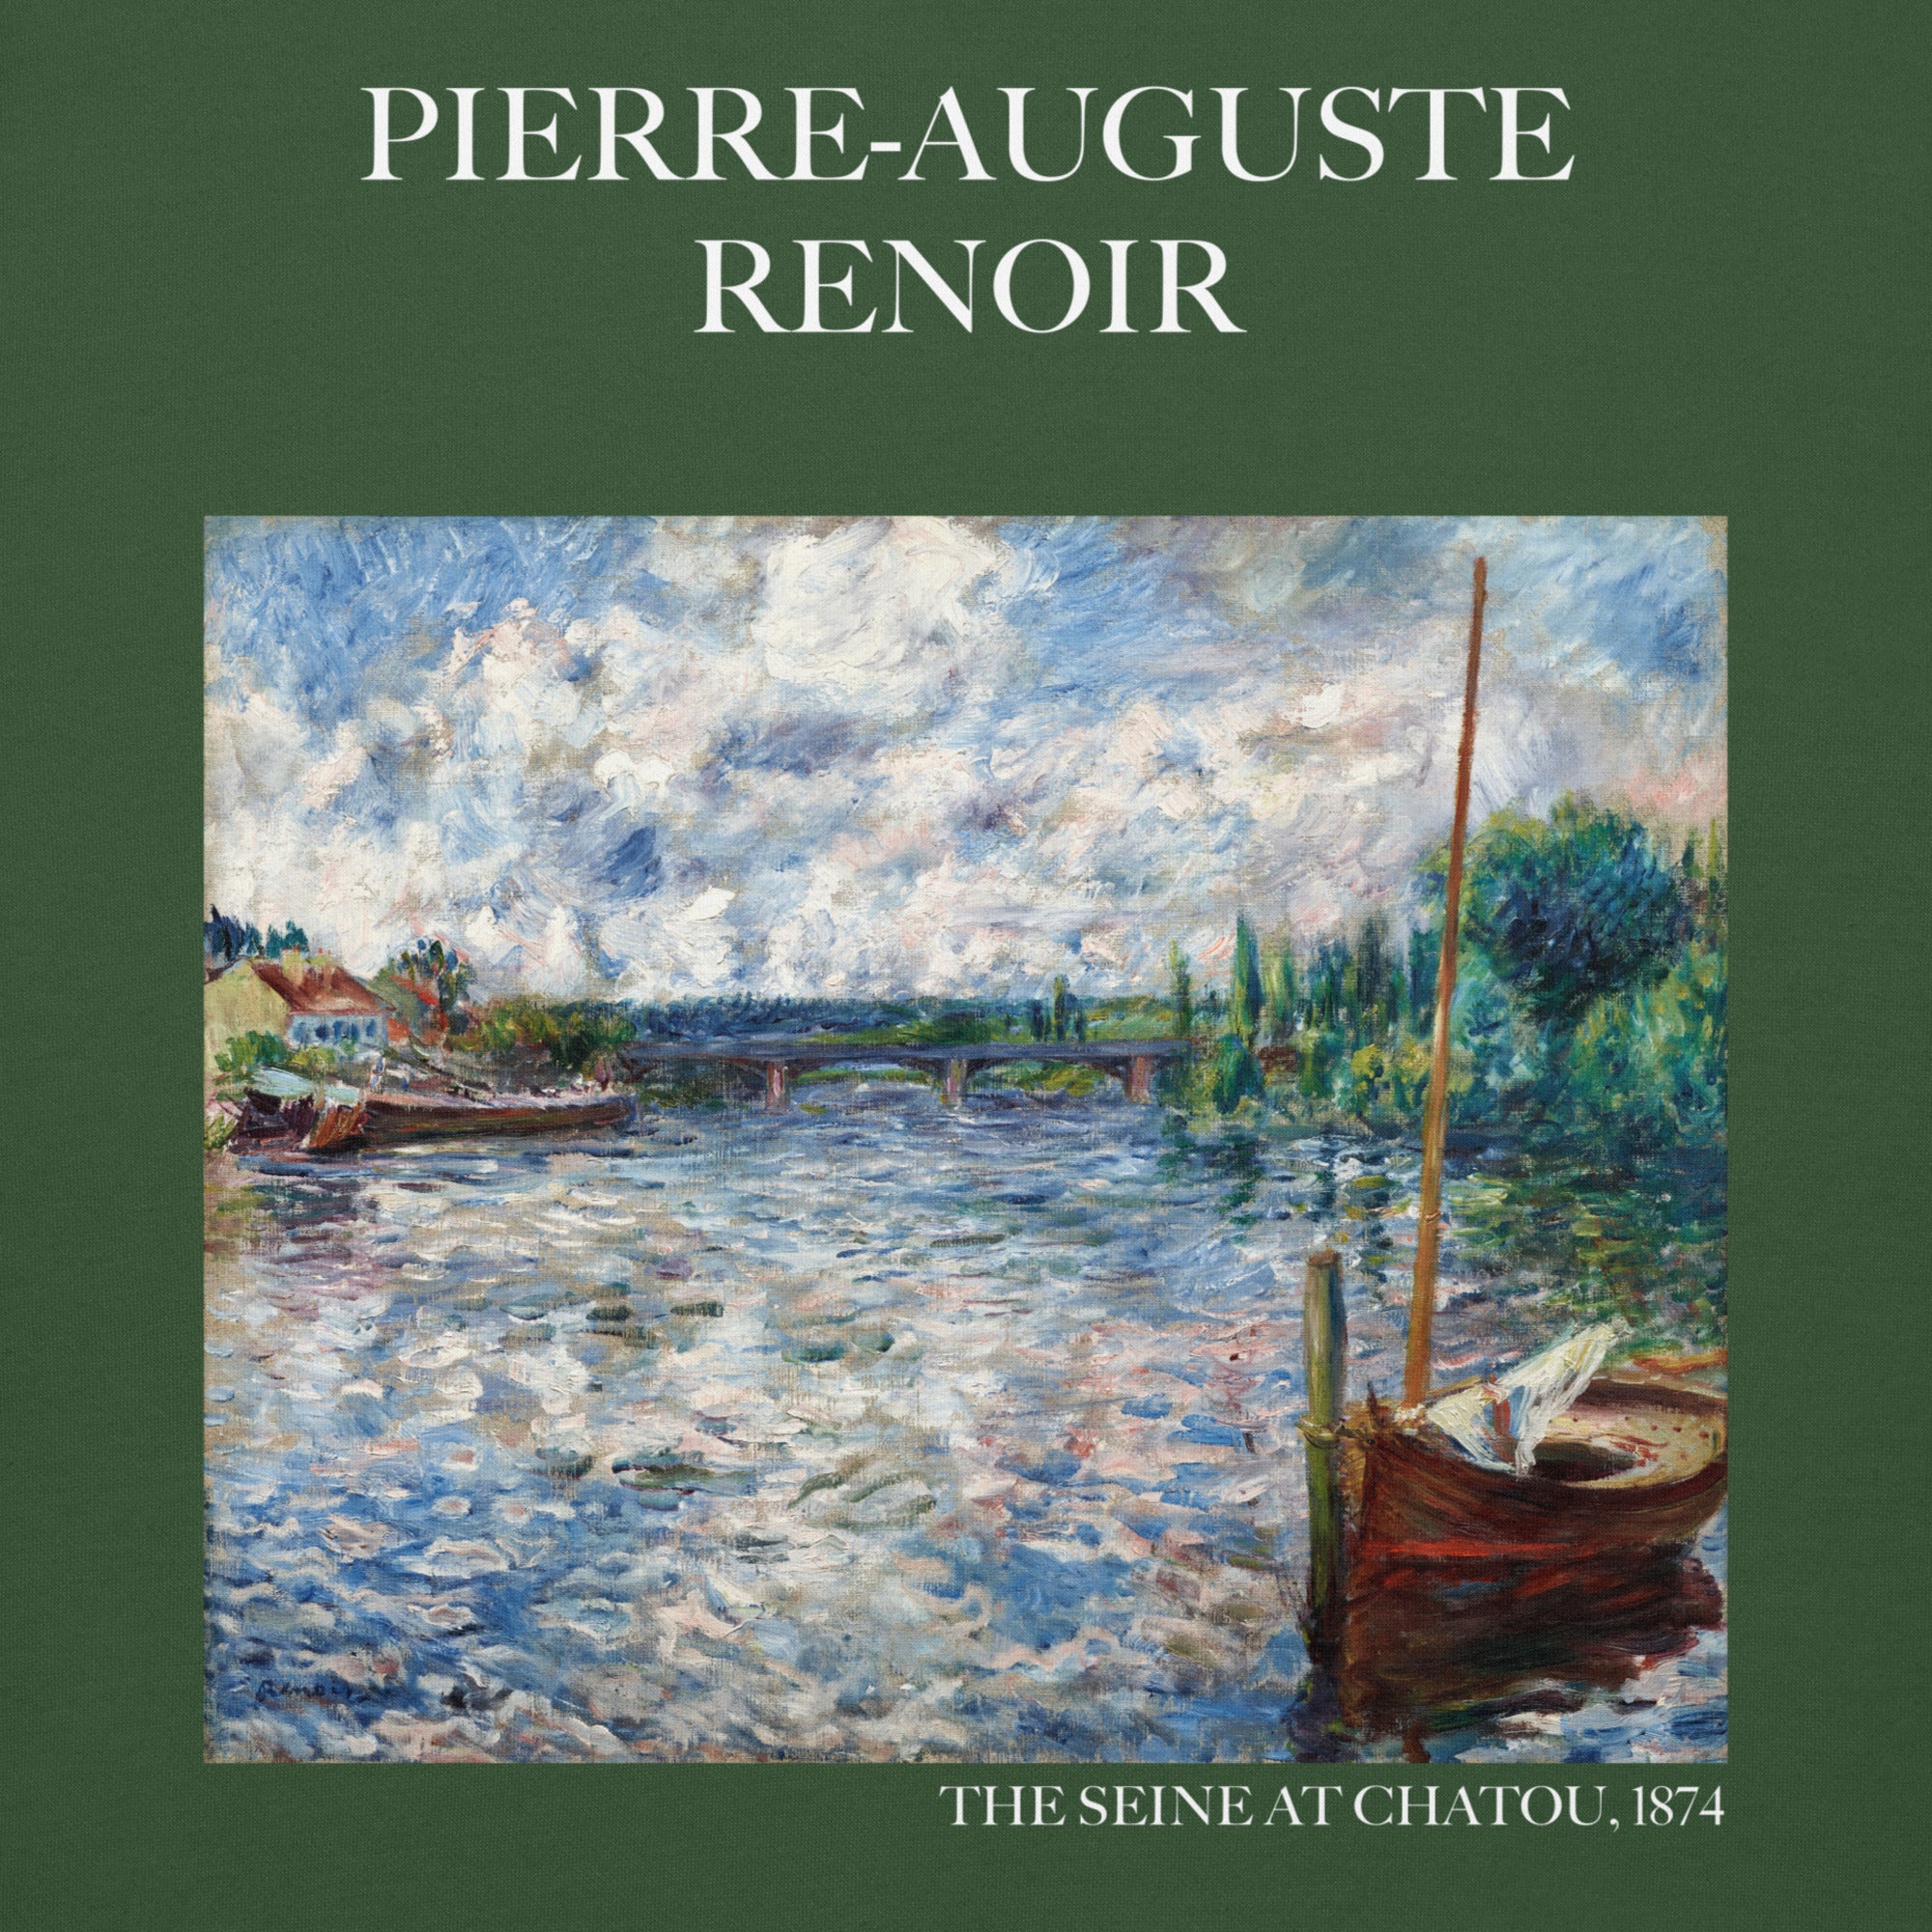 Pierre-Auguste Renoir 'The Seine at Chatou' Famous Painting Hoodie | Unisex Premium Art Hoodie